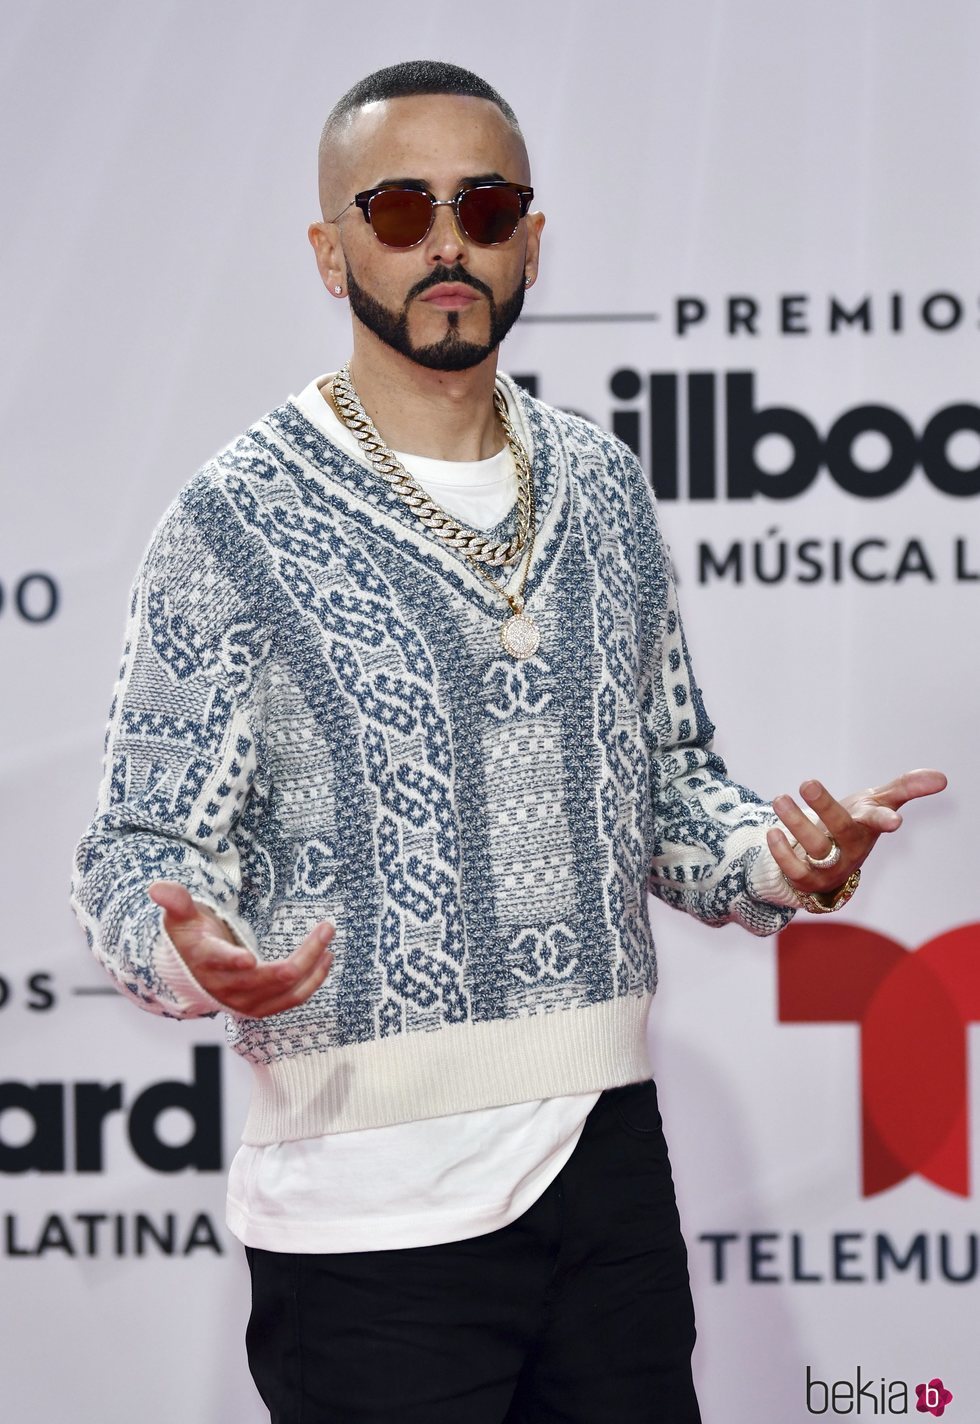 Yandel en los Billboard Latin Music Awards 2020